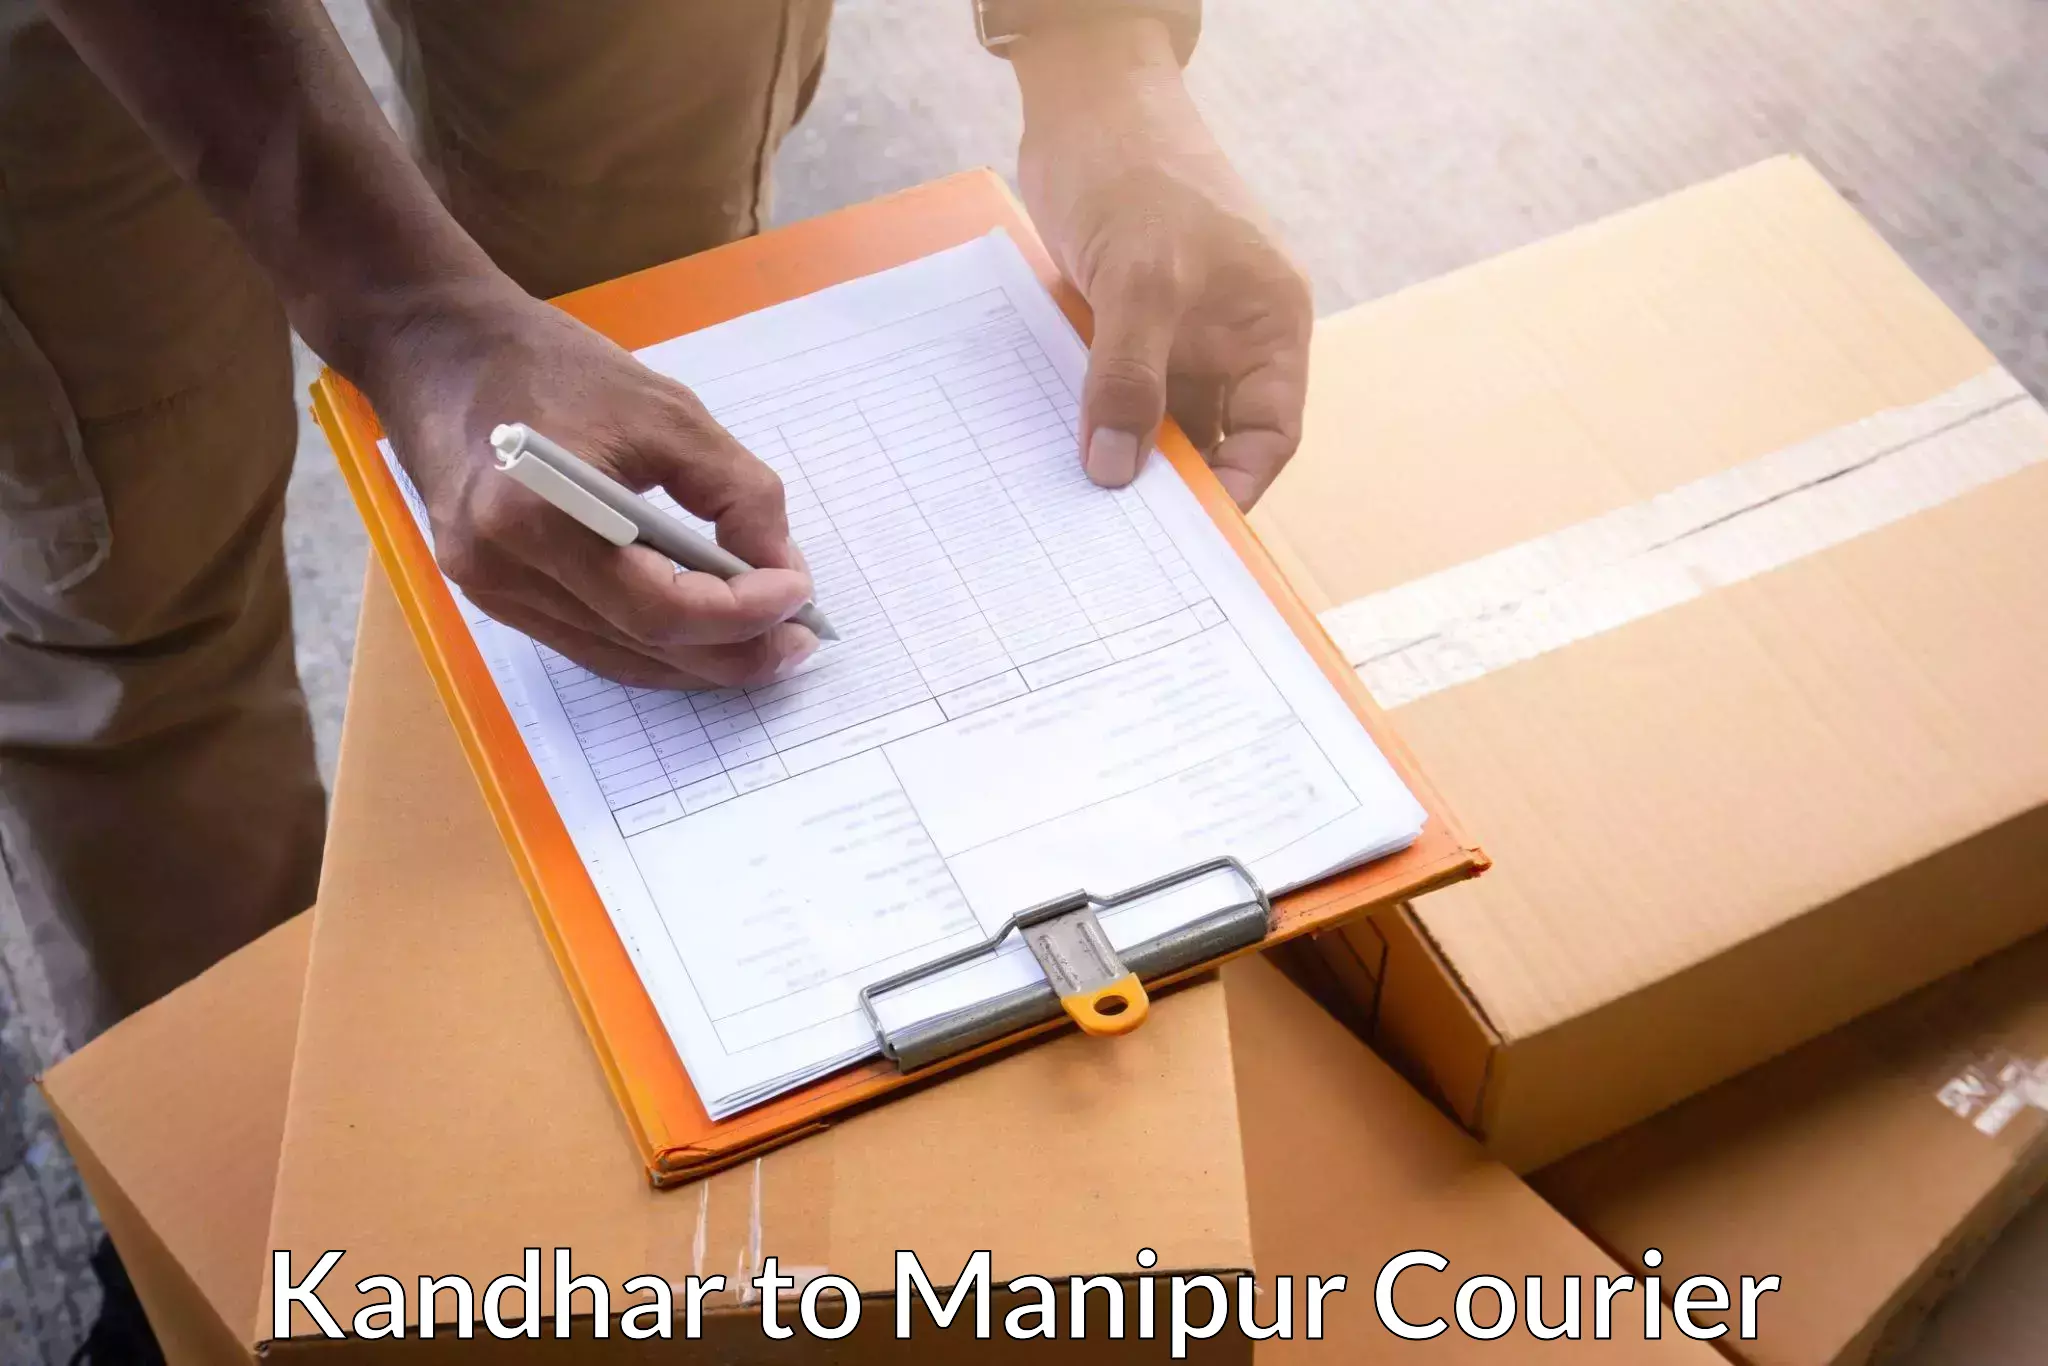 Courier service comparison Kandhar to Chandel